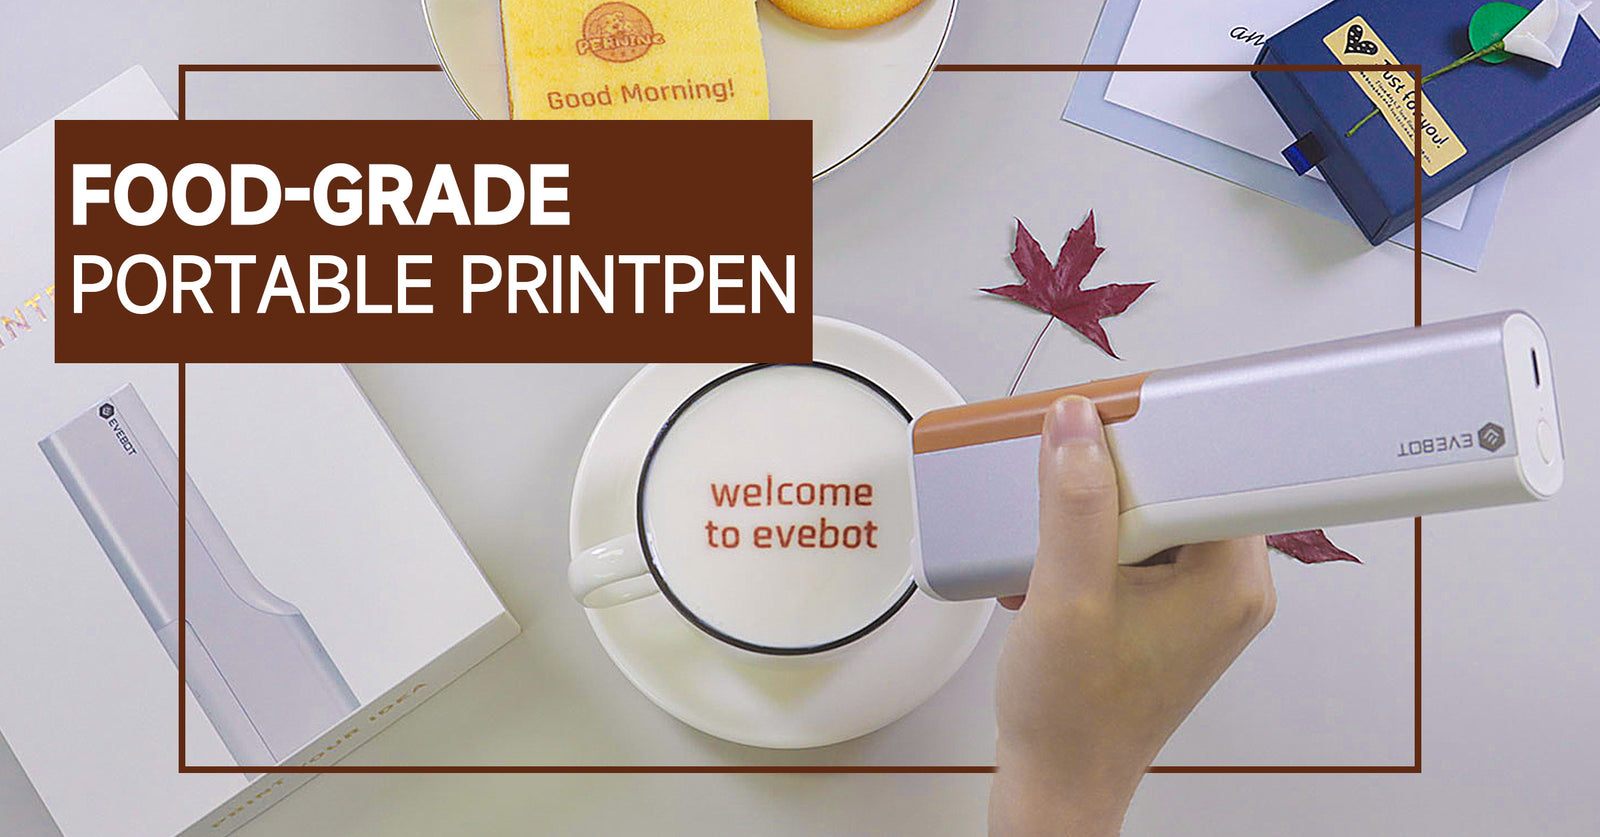 Food-grade Portable PrintPen Creates Infinite Possibilities